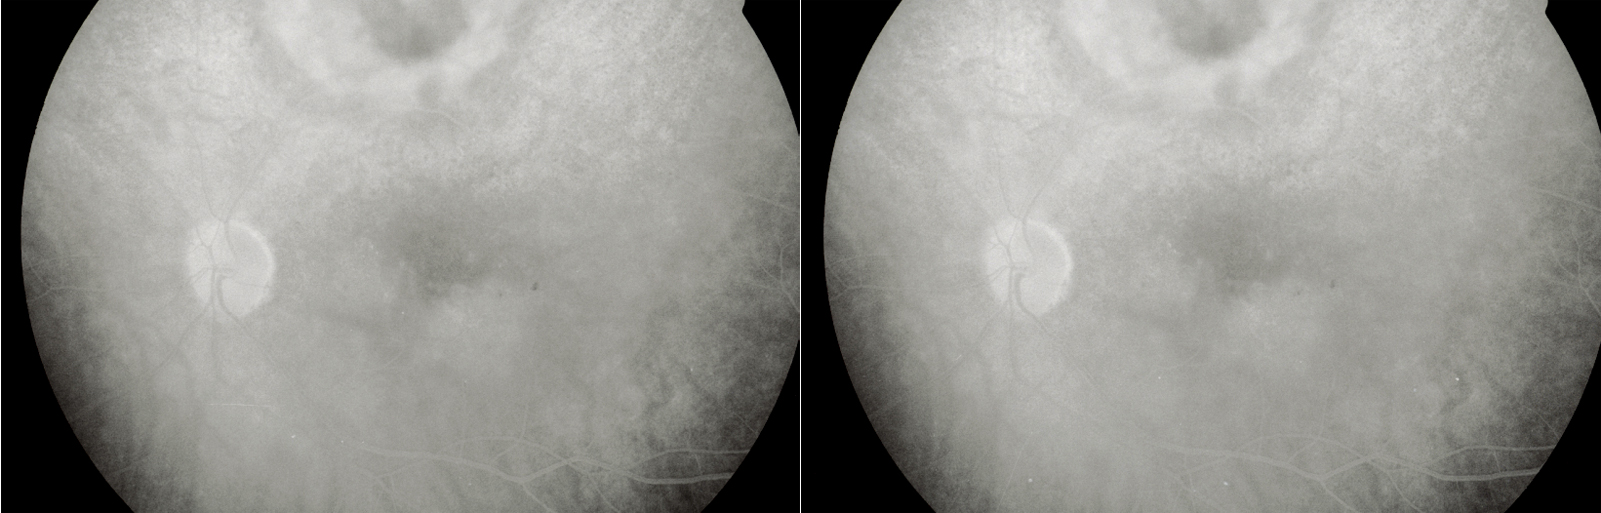 Retinal Vascular LEakage of the macula